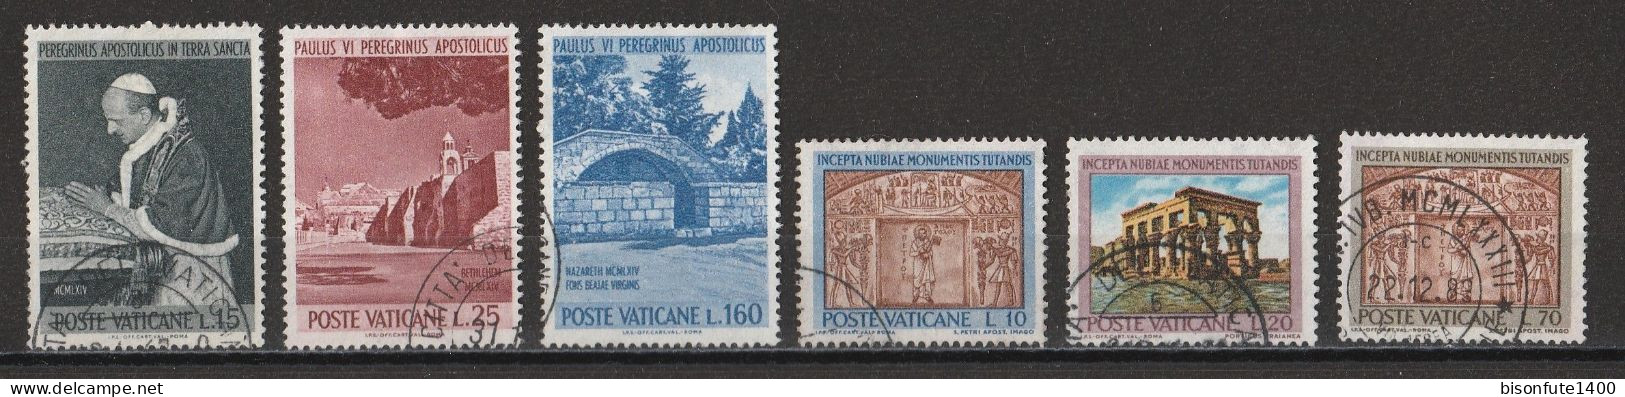 Vatican 1964 : Timbres Yvert & Tellier N° 393 - 394 - 396 - 397 - 398 - 399 - 400 - 401 - 402 - 403 Et 404 Oblitérés. - Usados